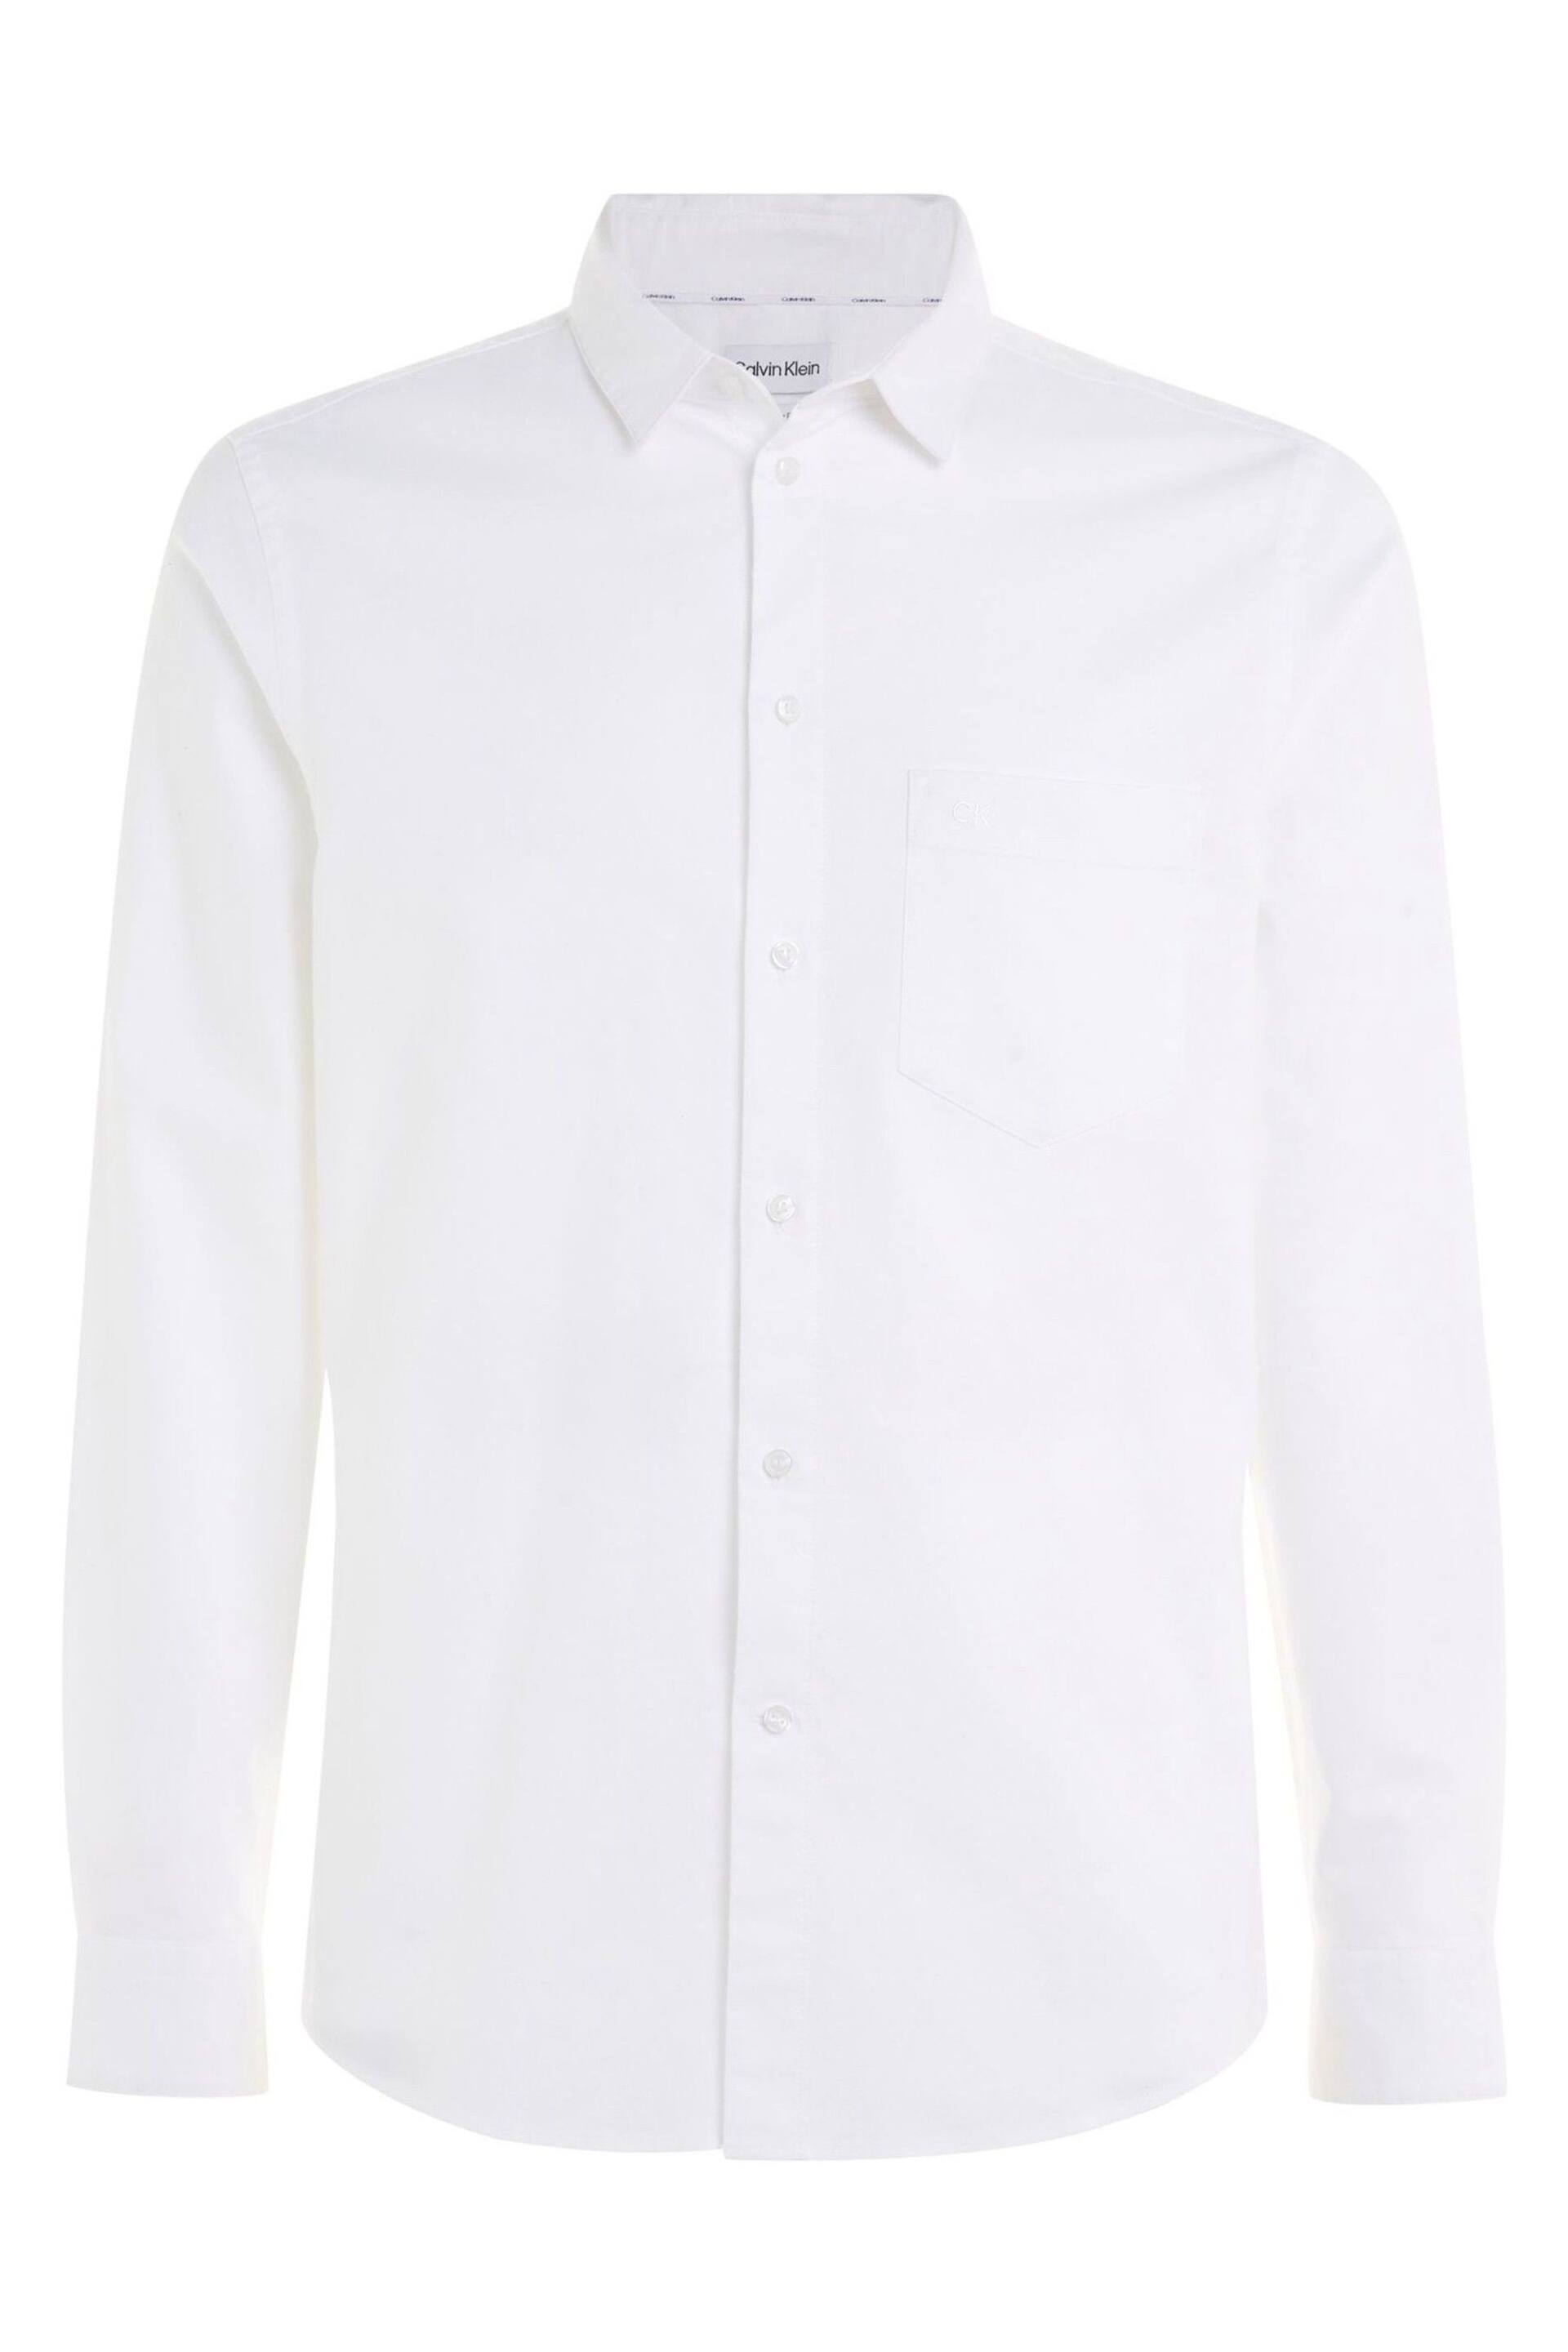 Calvin Klein White Stretch Oxford Shirt - Image 4 of 7